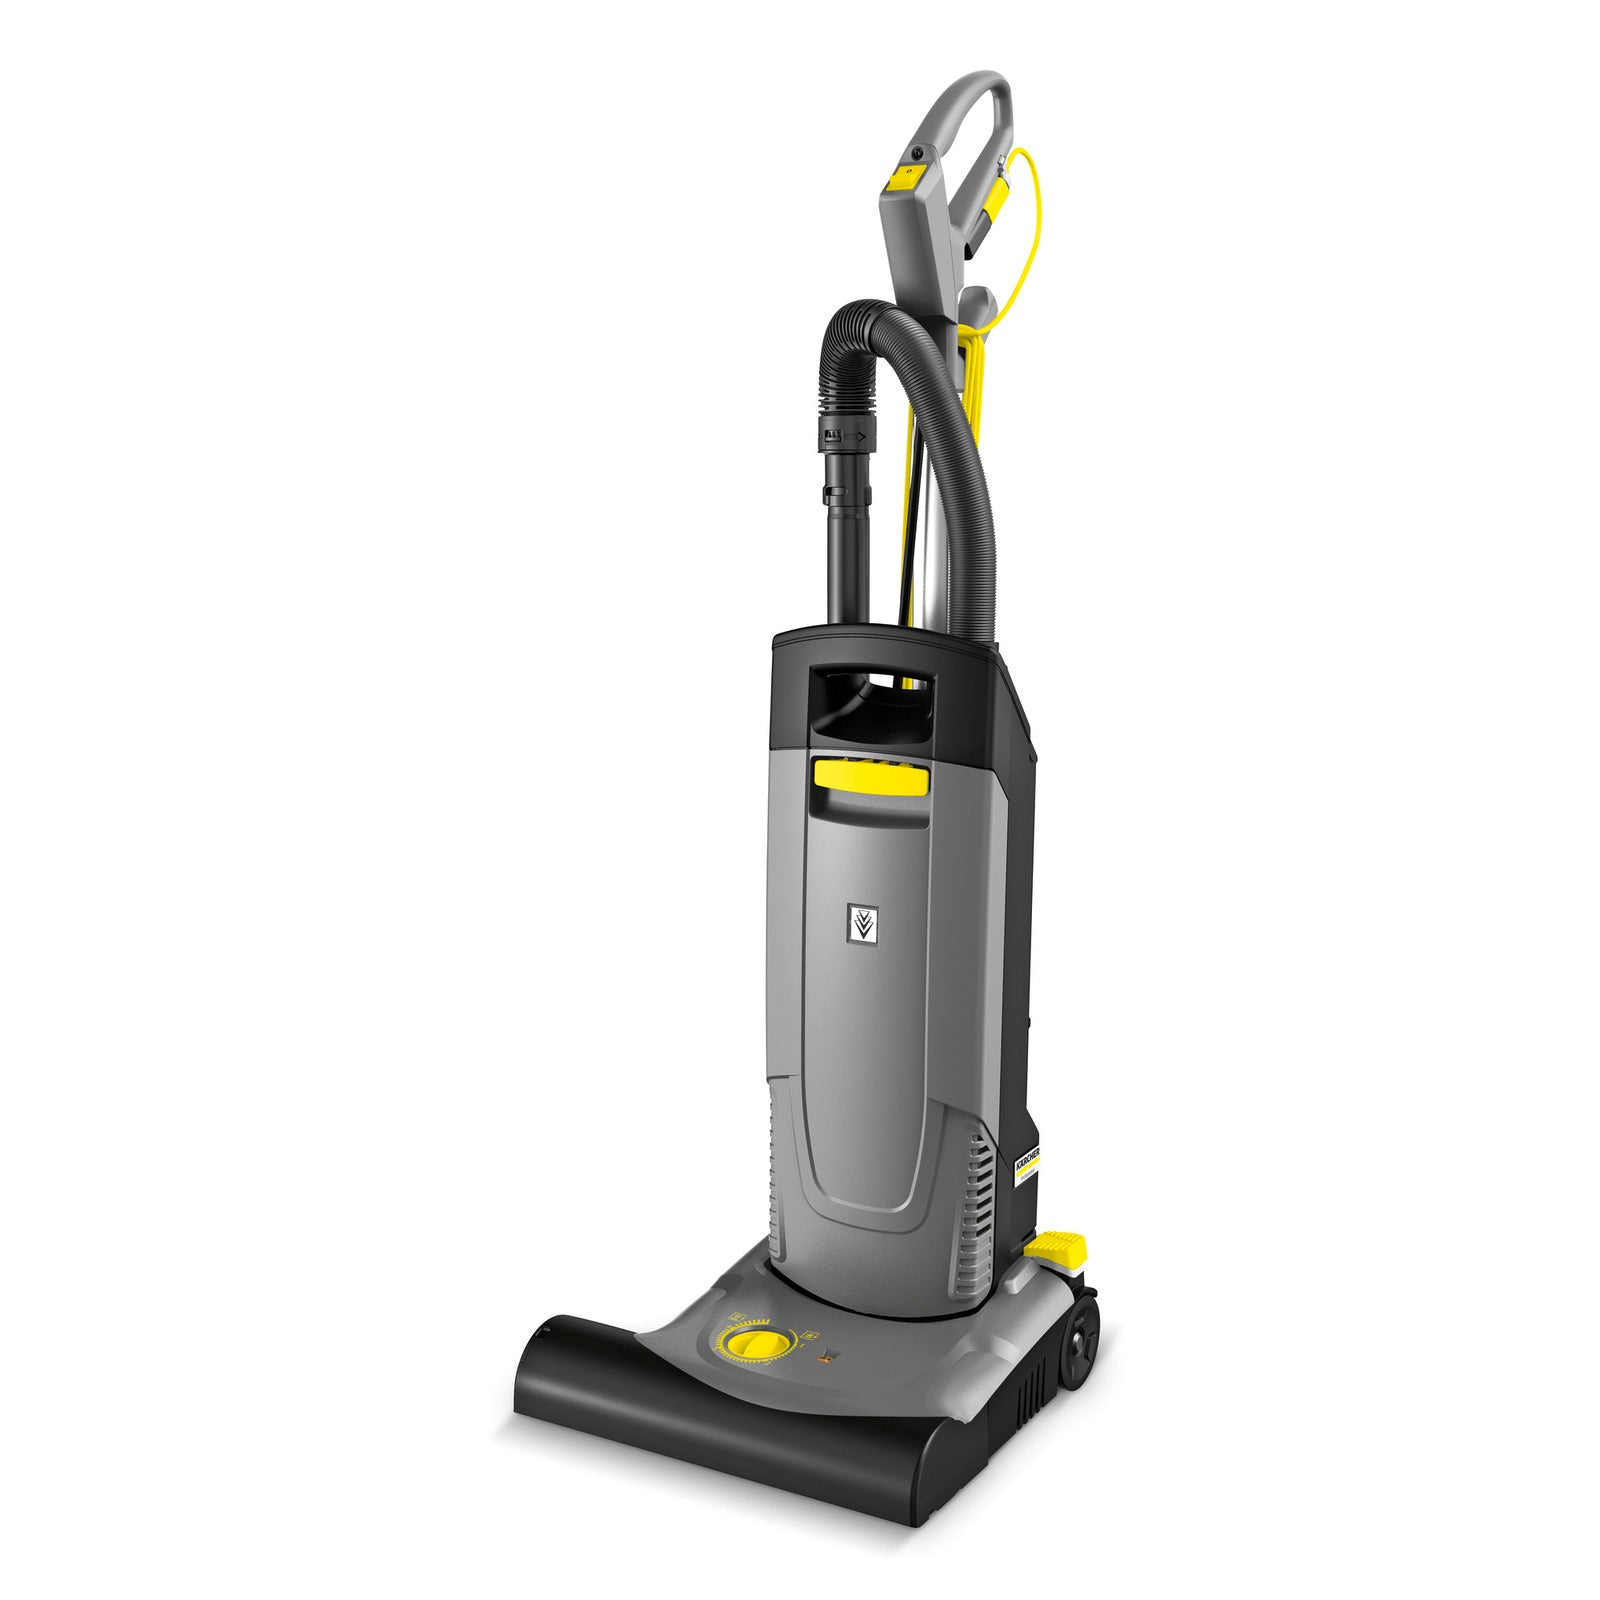 Kärcher carpet brush vacuum cleaner CV 38/2 Adv